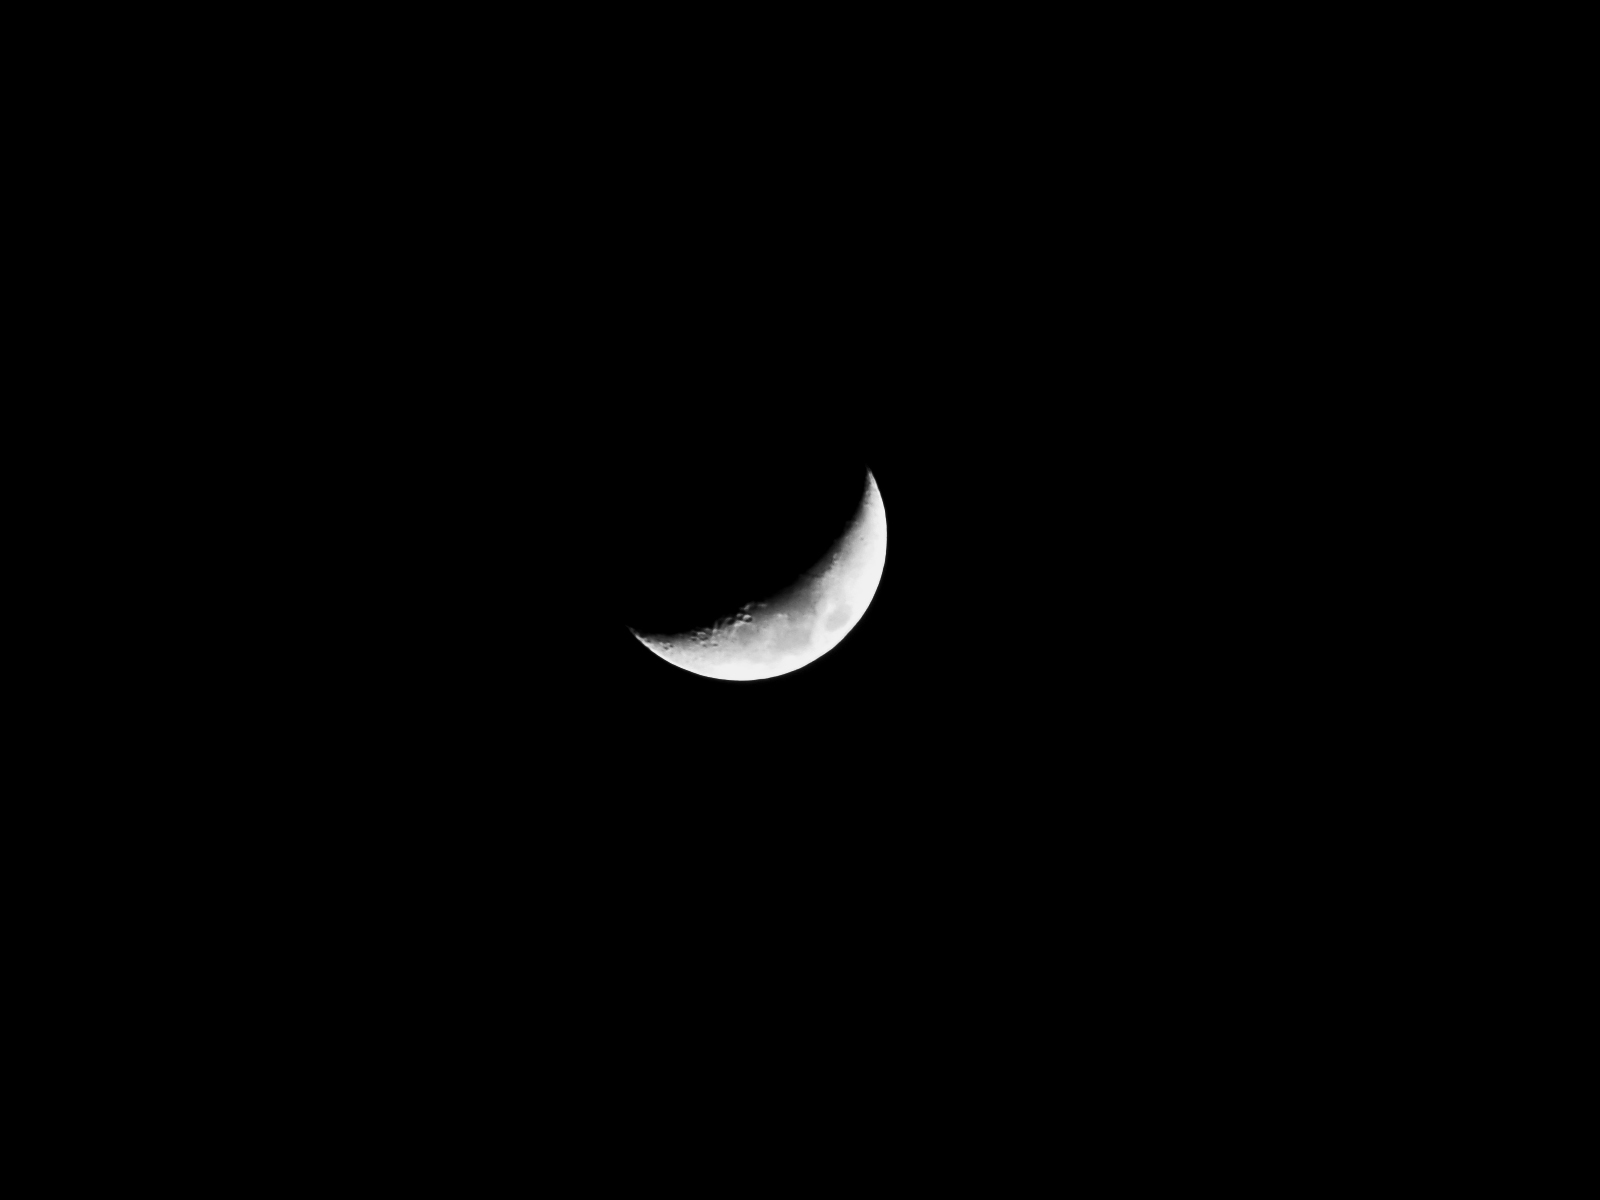 Quarter moon november 25, 2006 photo